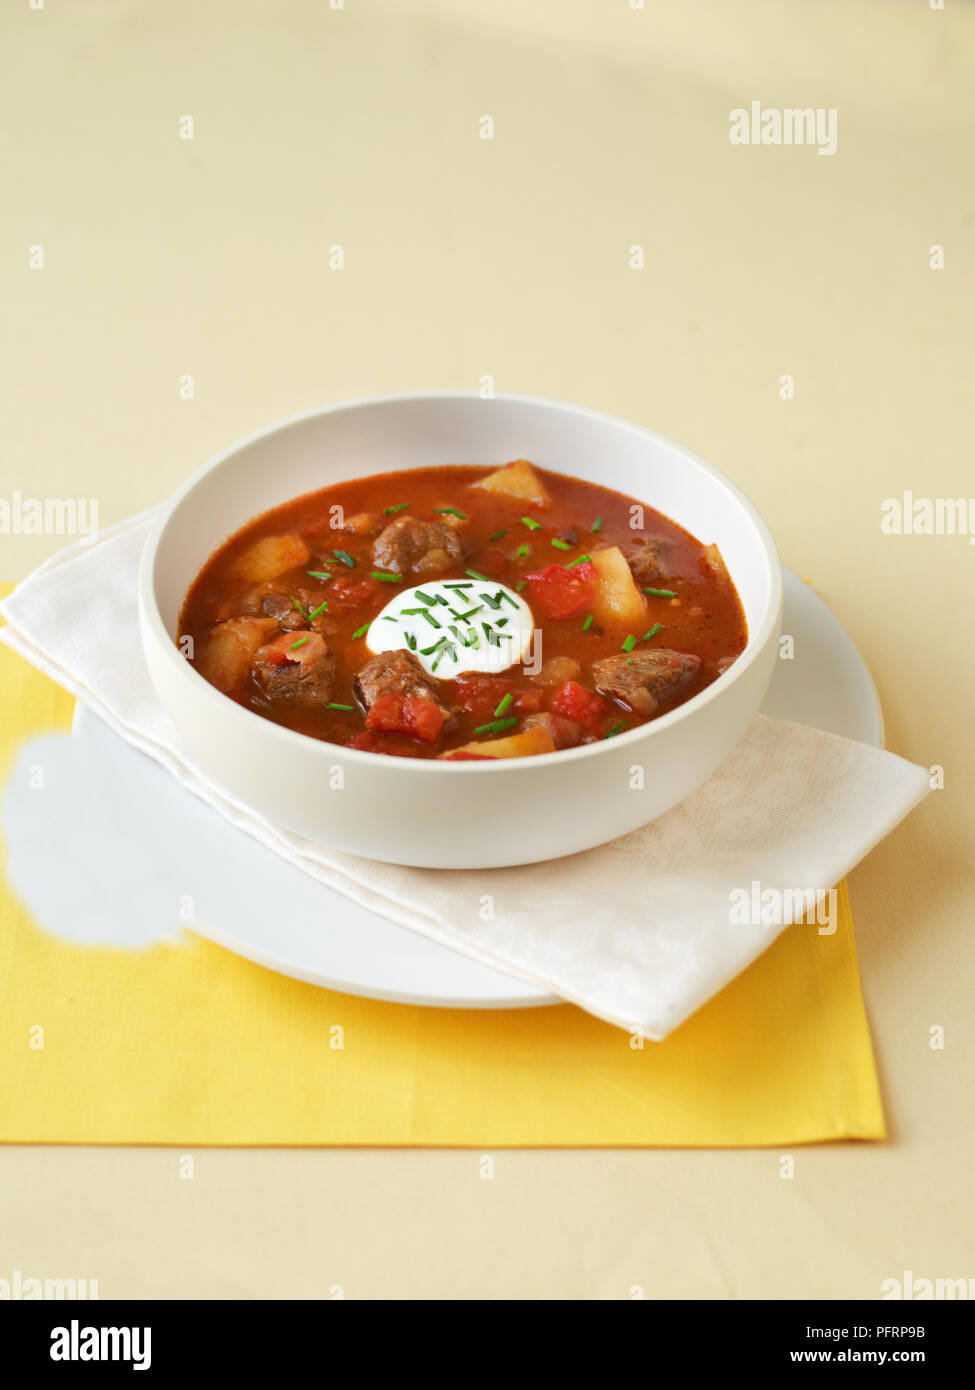 Bowl of goulash soup Stock Photo